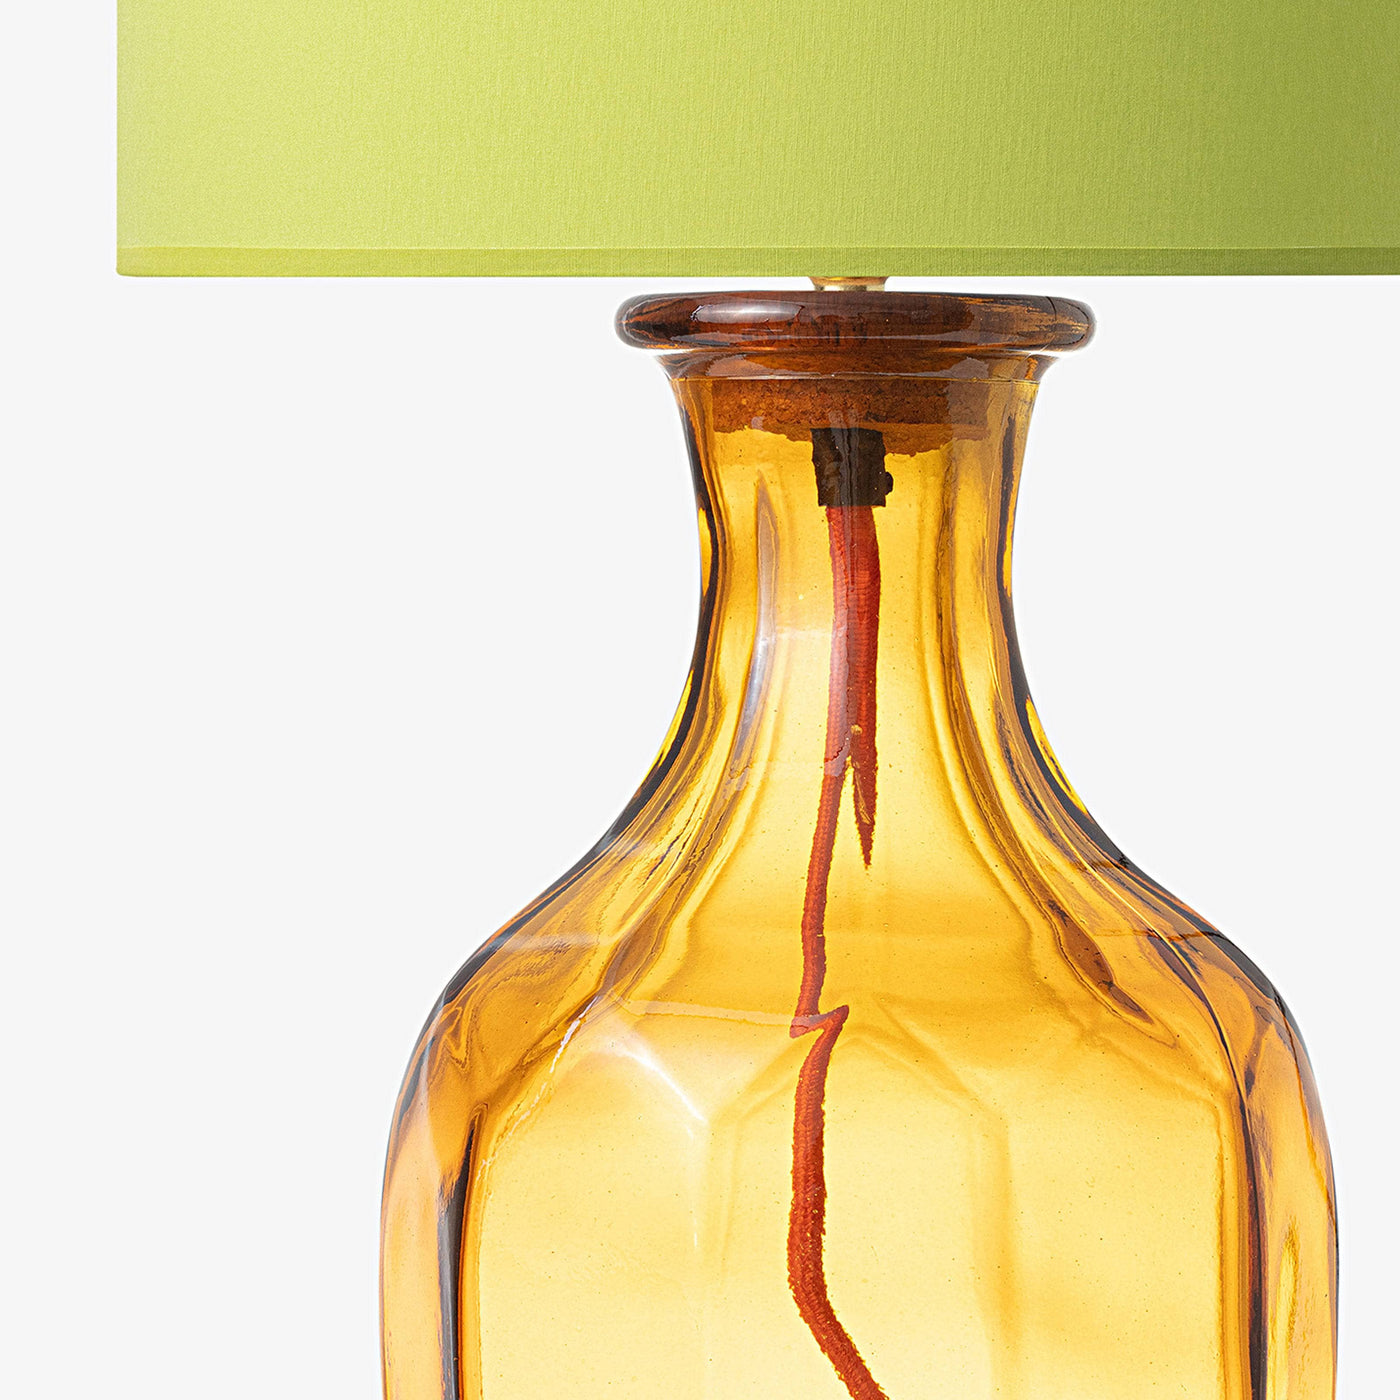 Hoku Glass Table Lamp, Amber, 35 cm Table & Bedside Lamps sazy.com